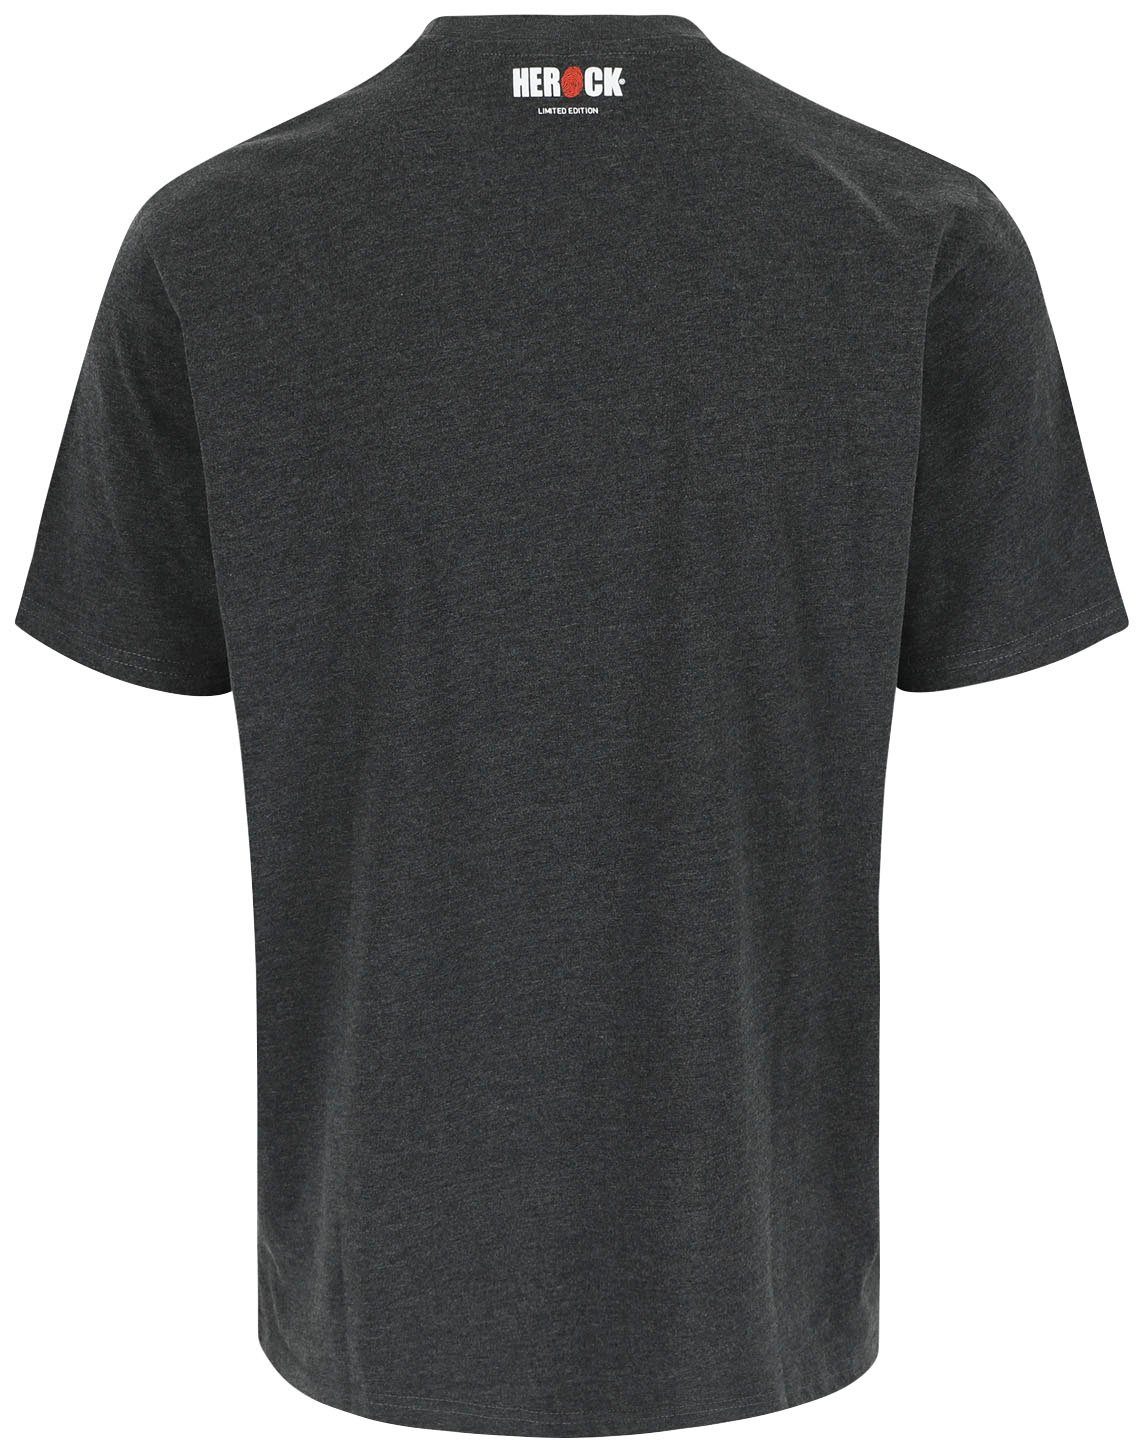 Herock T-Shirt Edition Limited Maximus